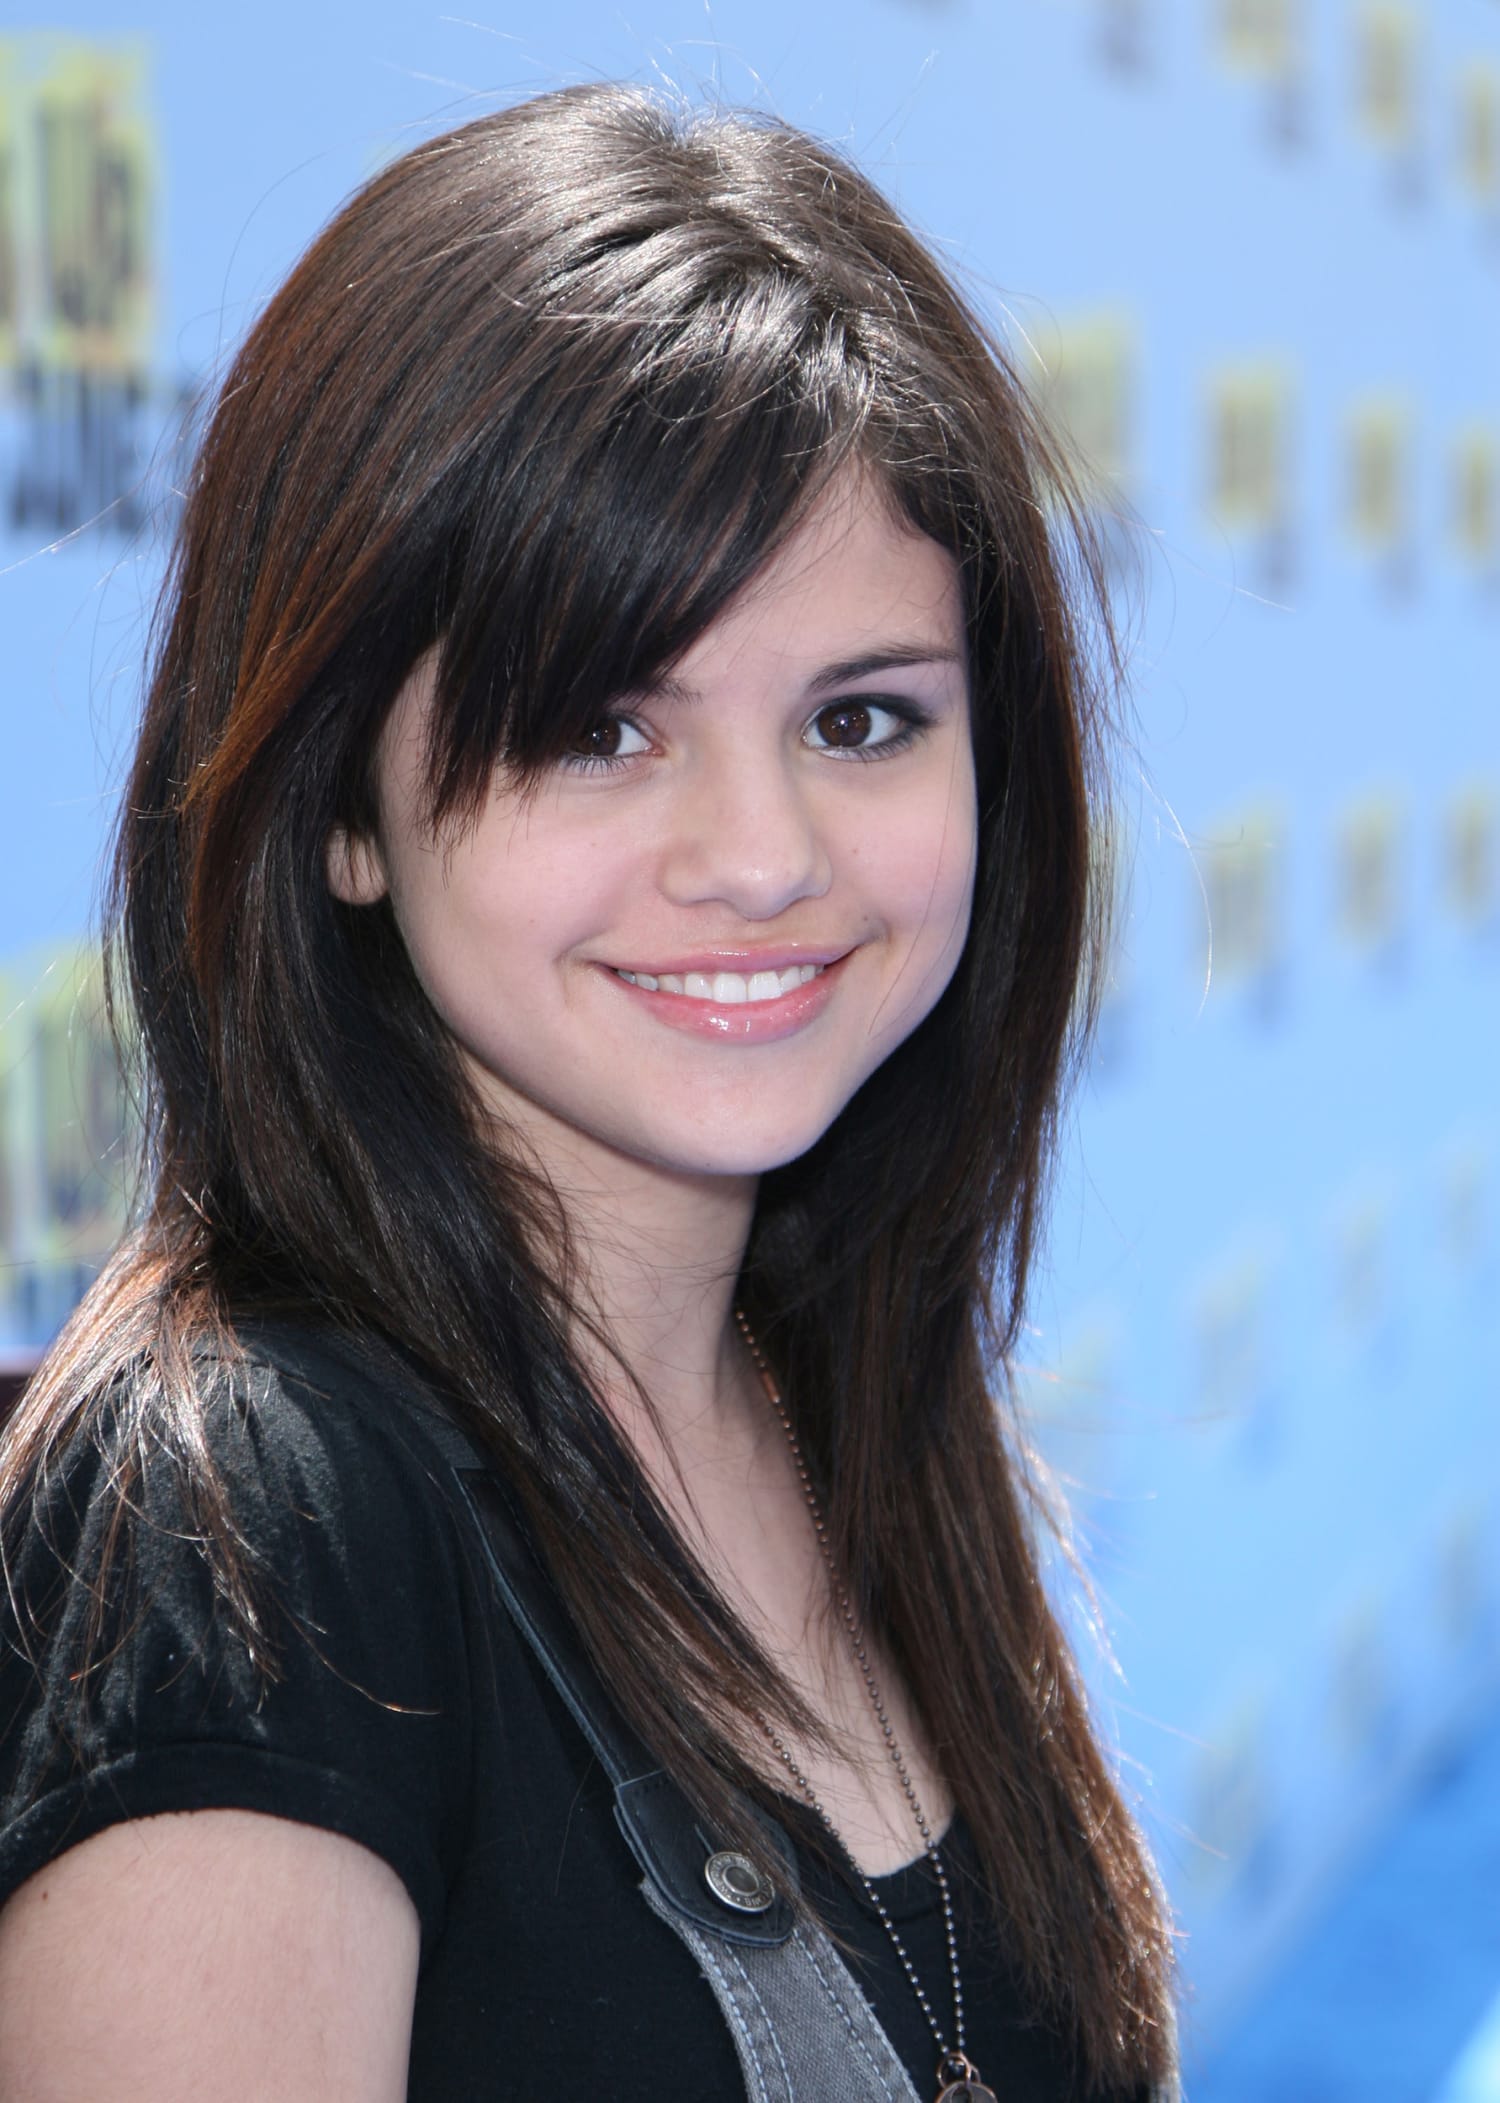 Selena Gomez debuts shorter hair on 'Revival' tour - UPI.com